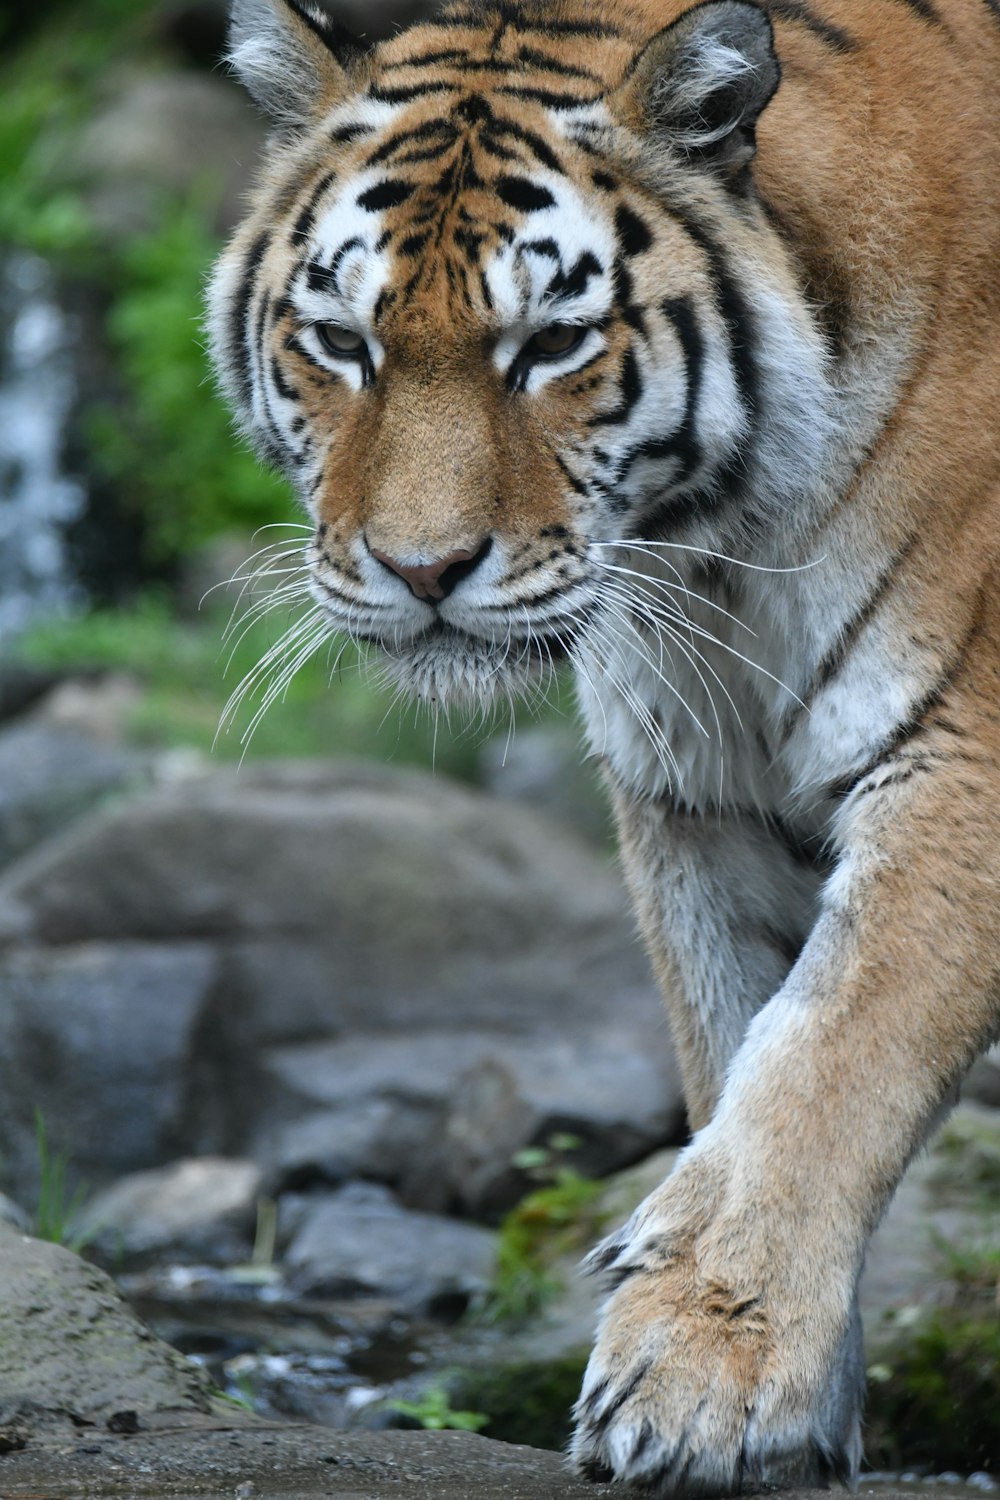 a tiger walking on rocks